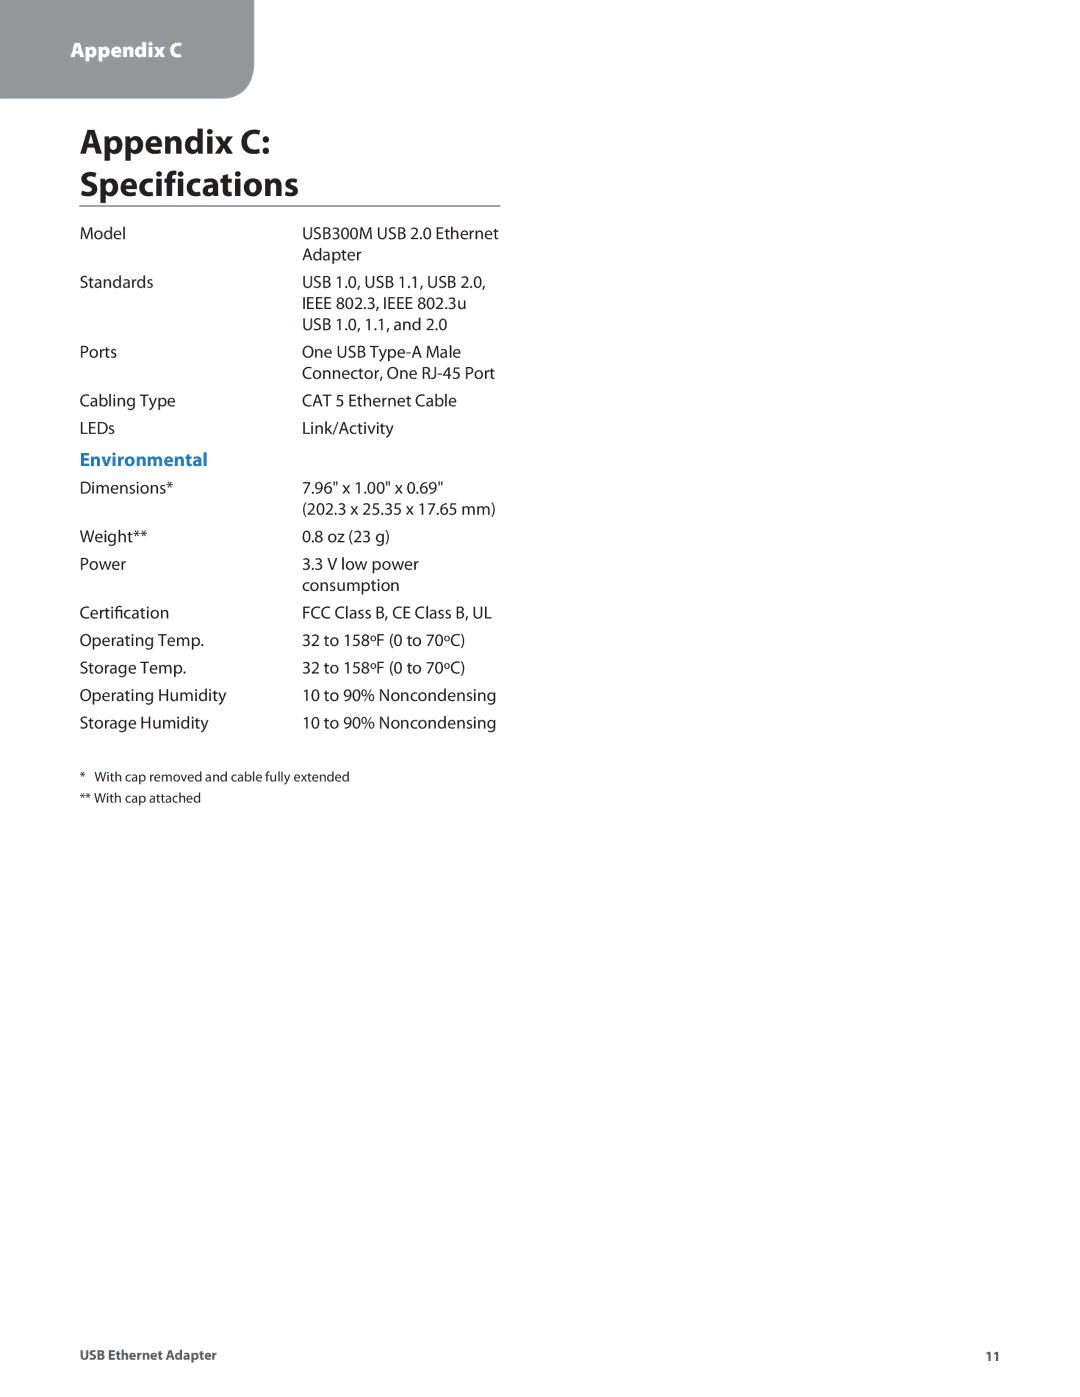 Linksys USB300M manual Appendix C Specifications, Environmental 